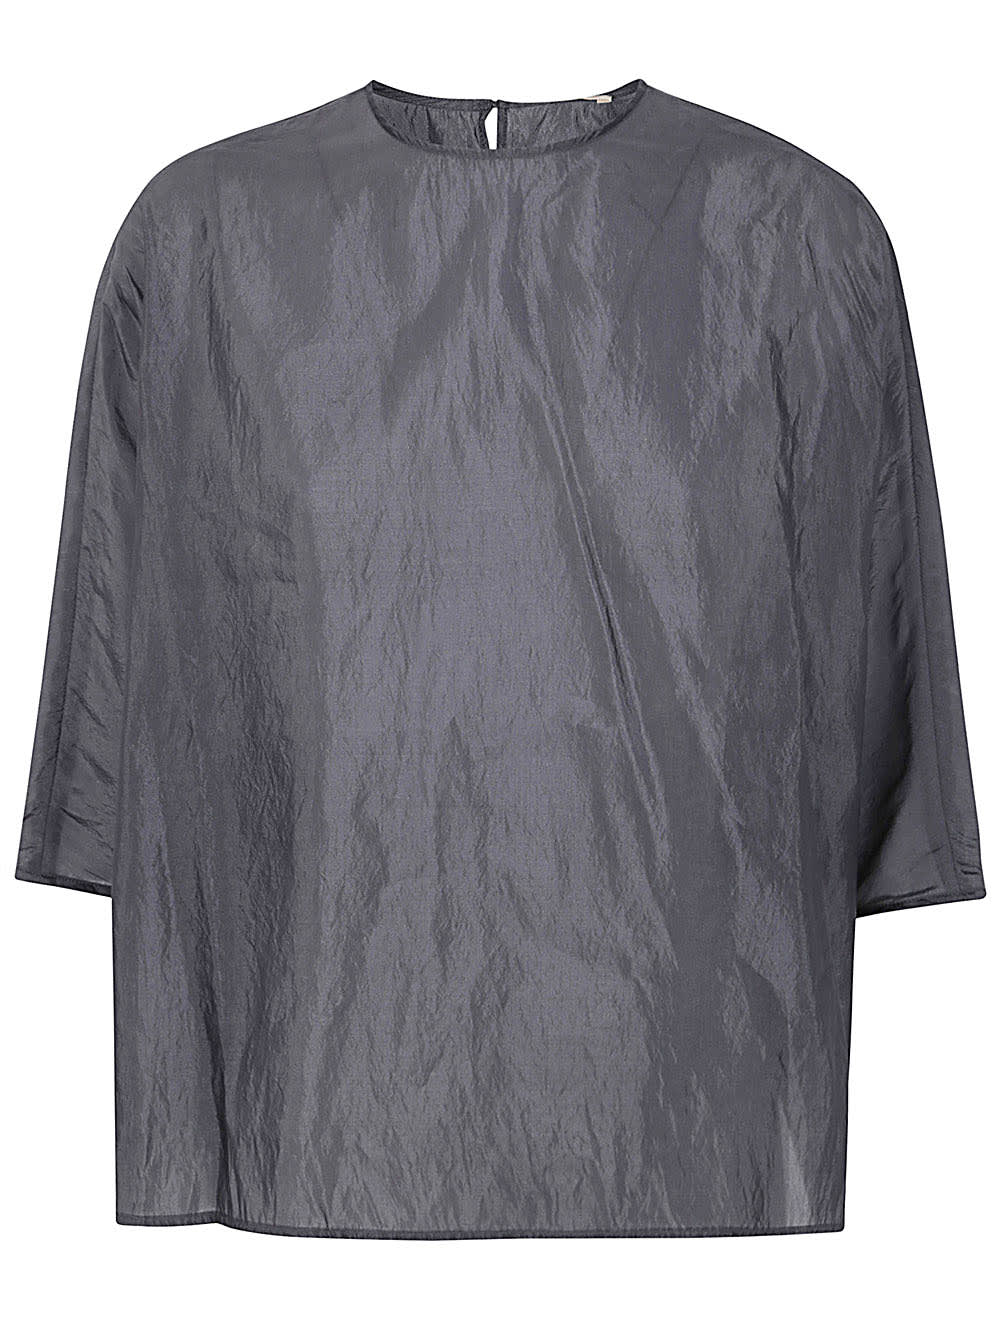 Apuntob Crew Neck Oversize Shirt In Grey